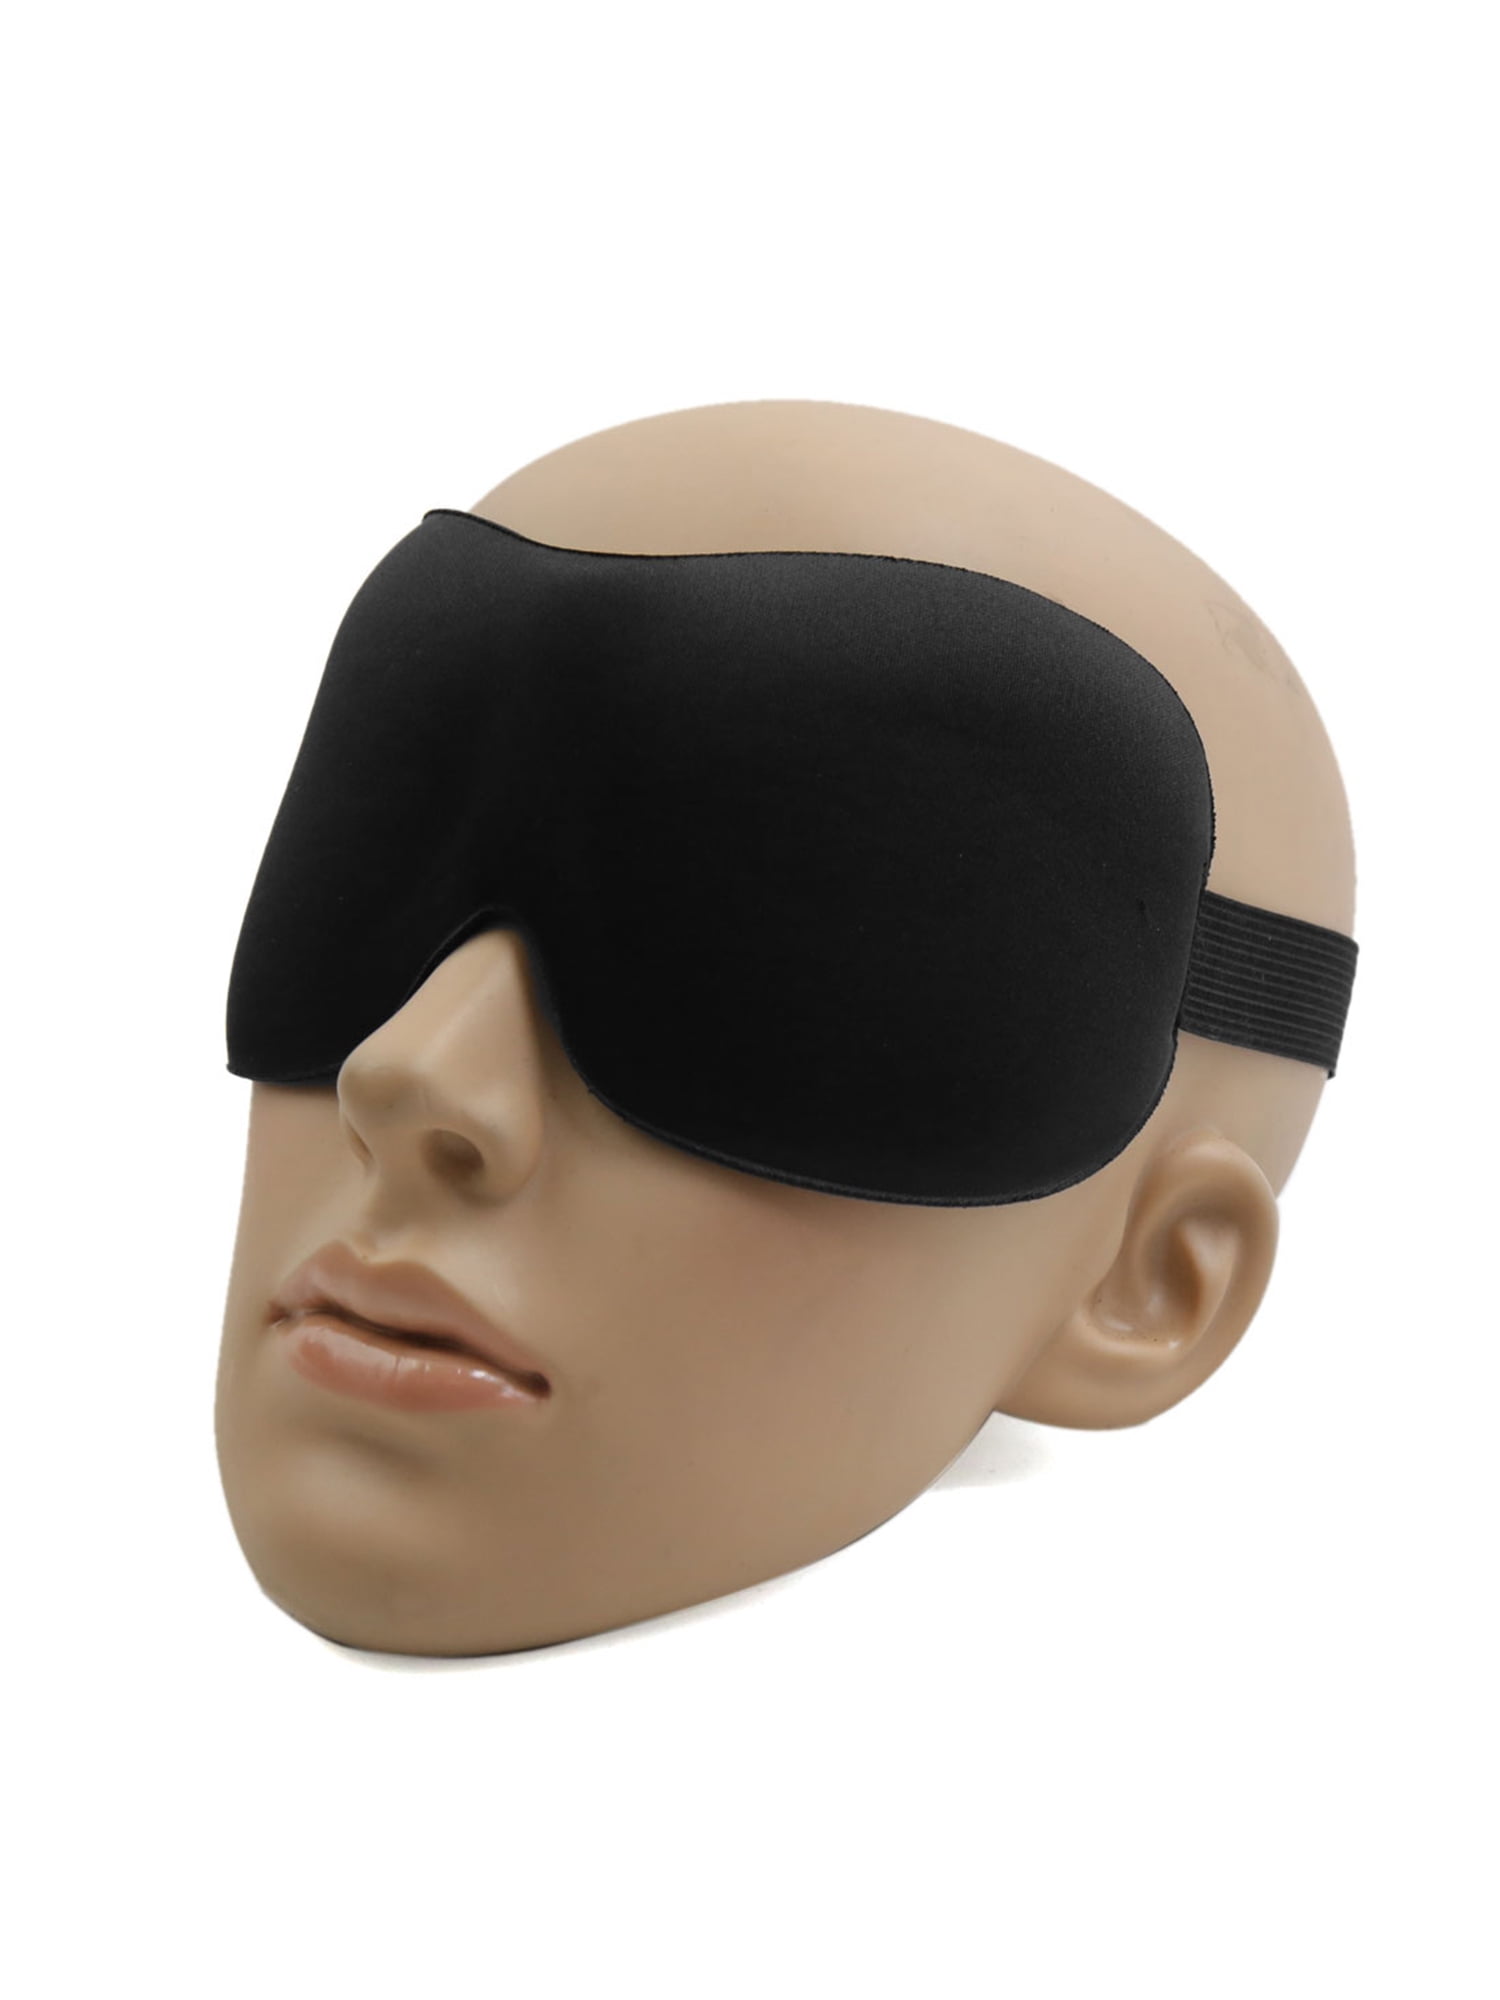 3D Soft Padded Blindfold Eye Mask Shade Cover Blinder for Rest Travel Sleep Aid 